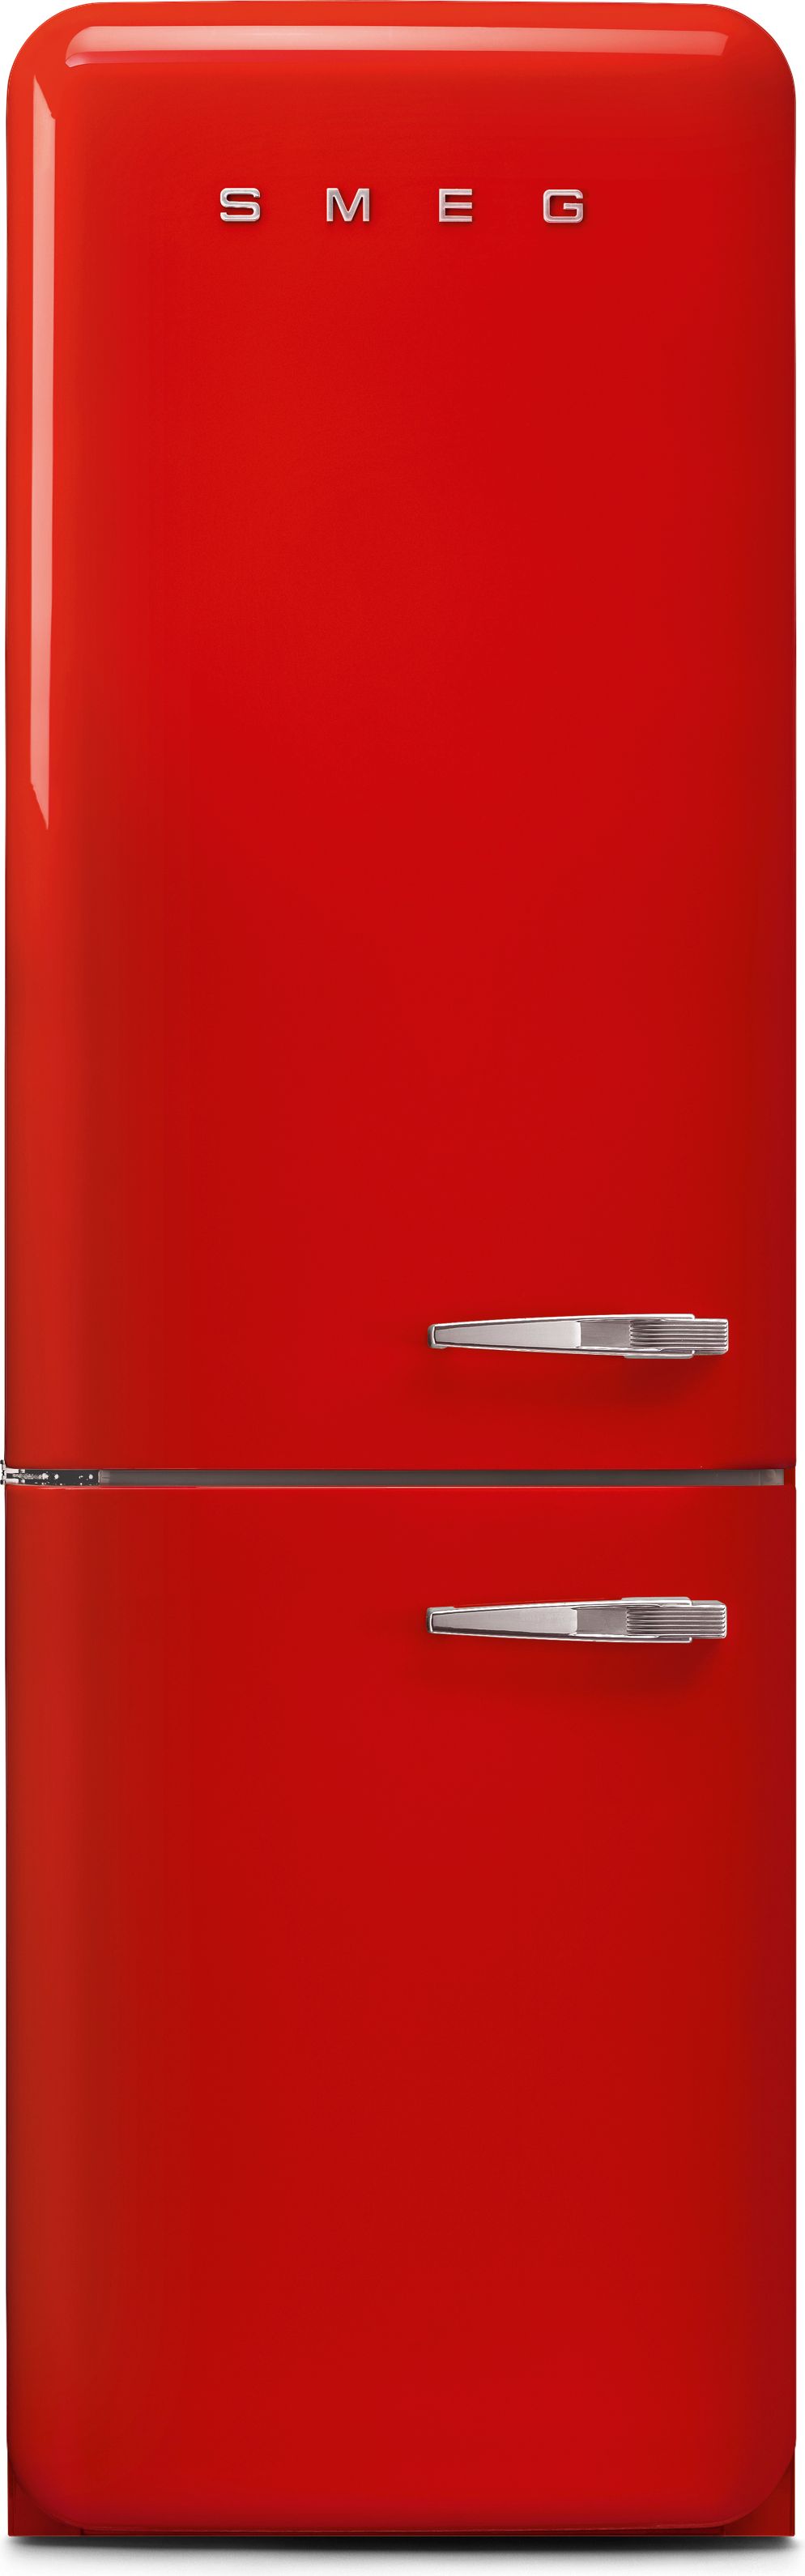 Smeg Left Hand Hinge FAB32LRD5UK 60/40 Frost Free Fridge Freezer - Red - D Rated, Red